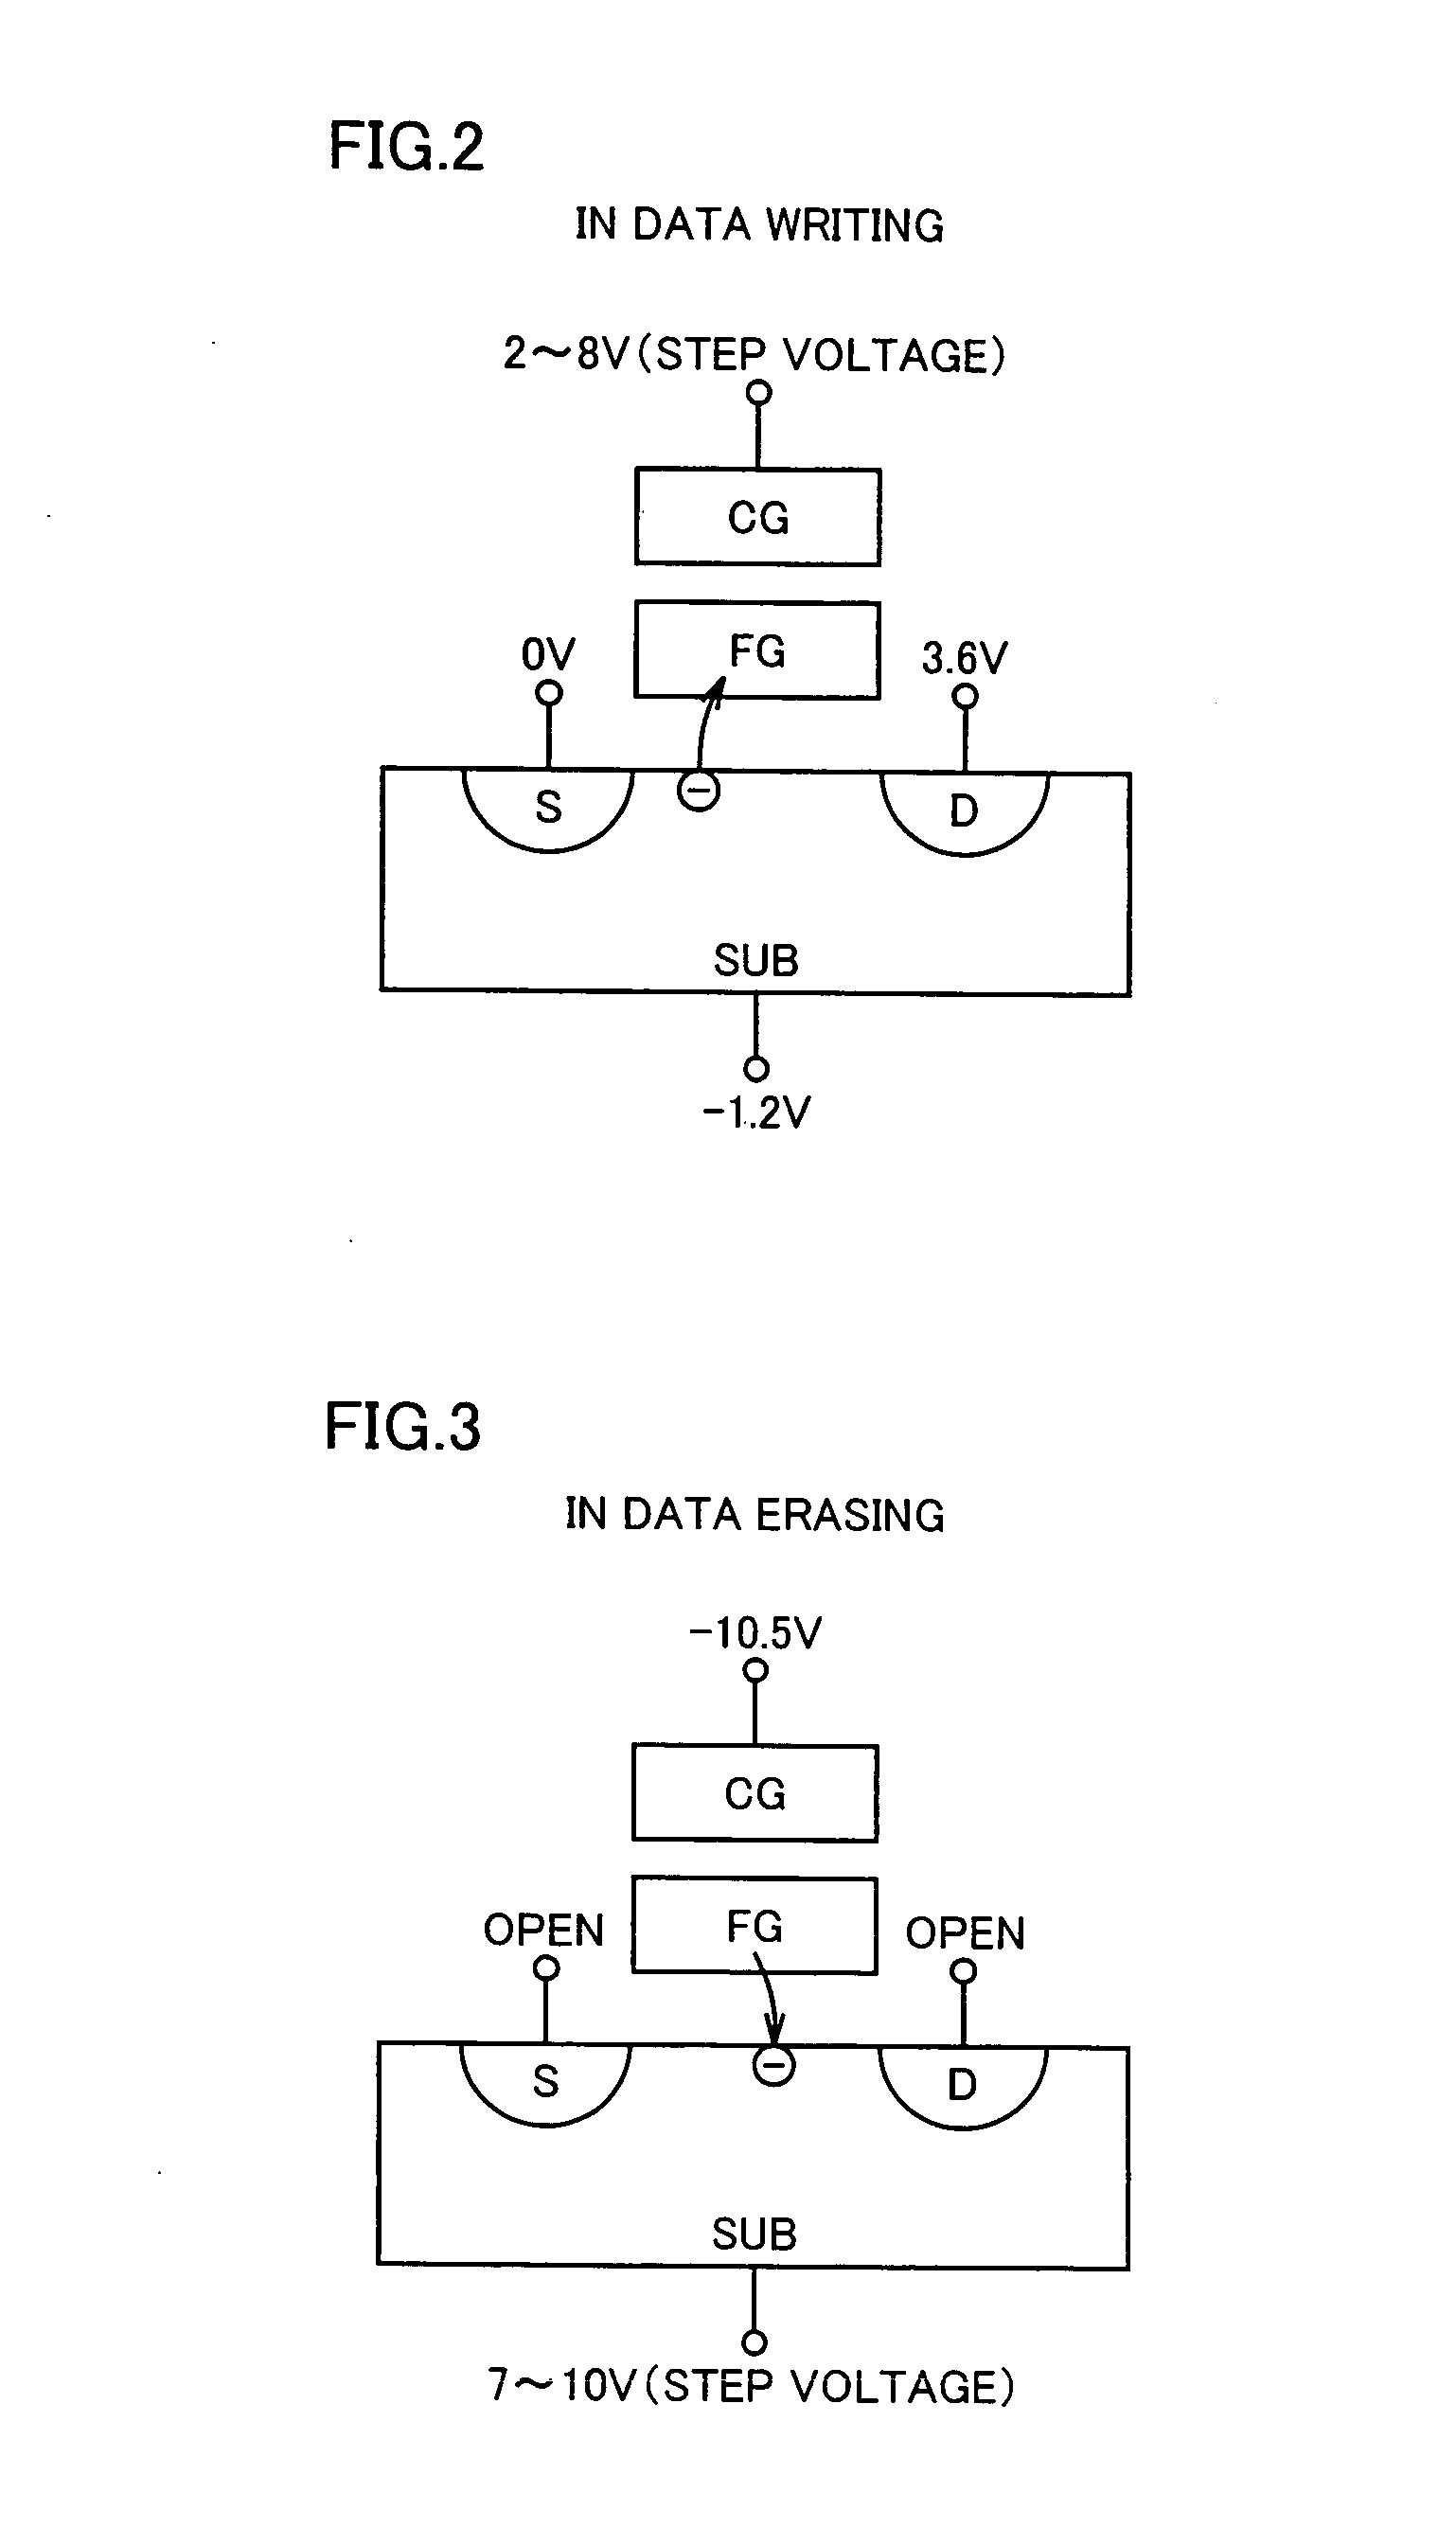 Floating-gate nonvolatile semiconductor memory device